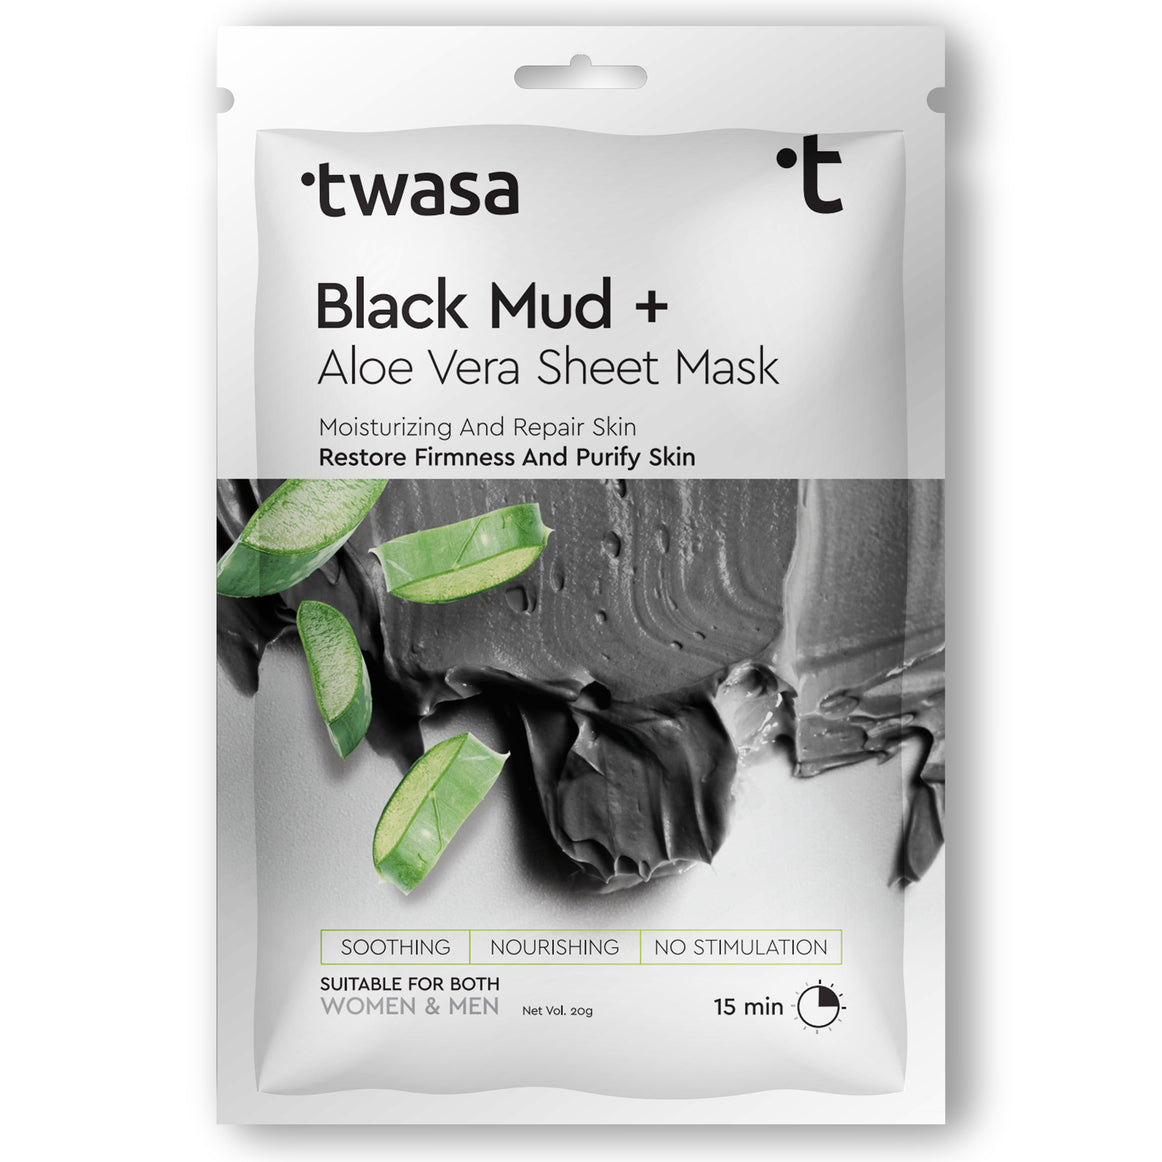 Our natural Black Mud Face Sheet Mask